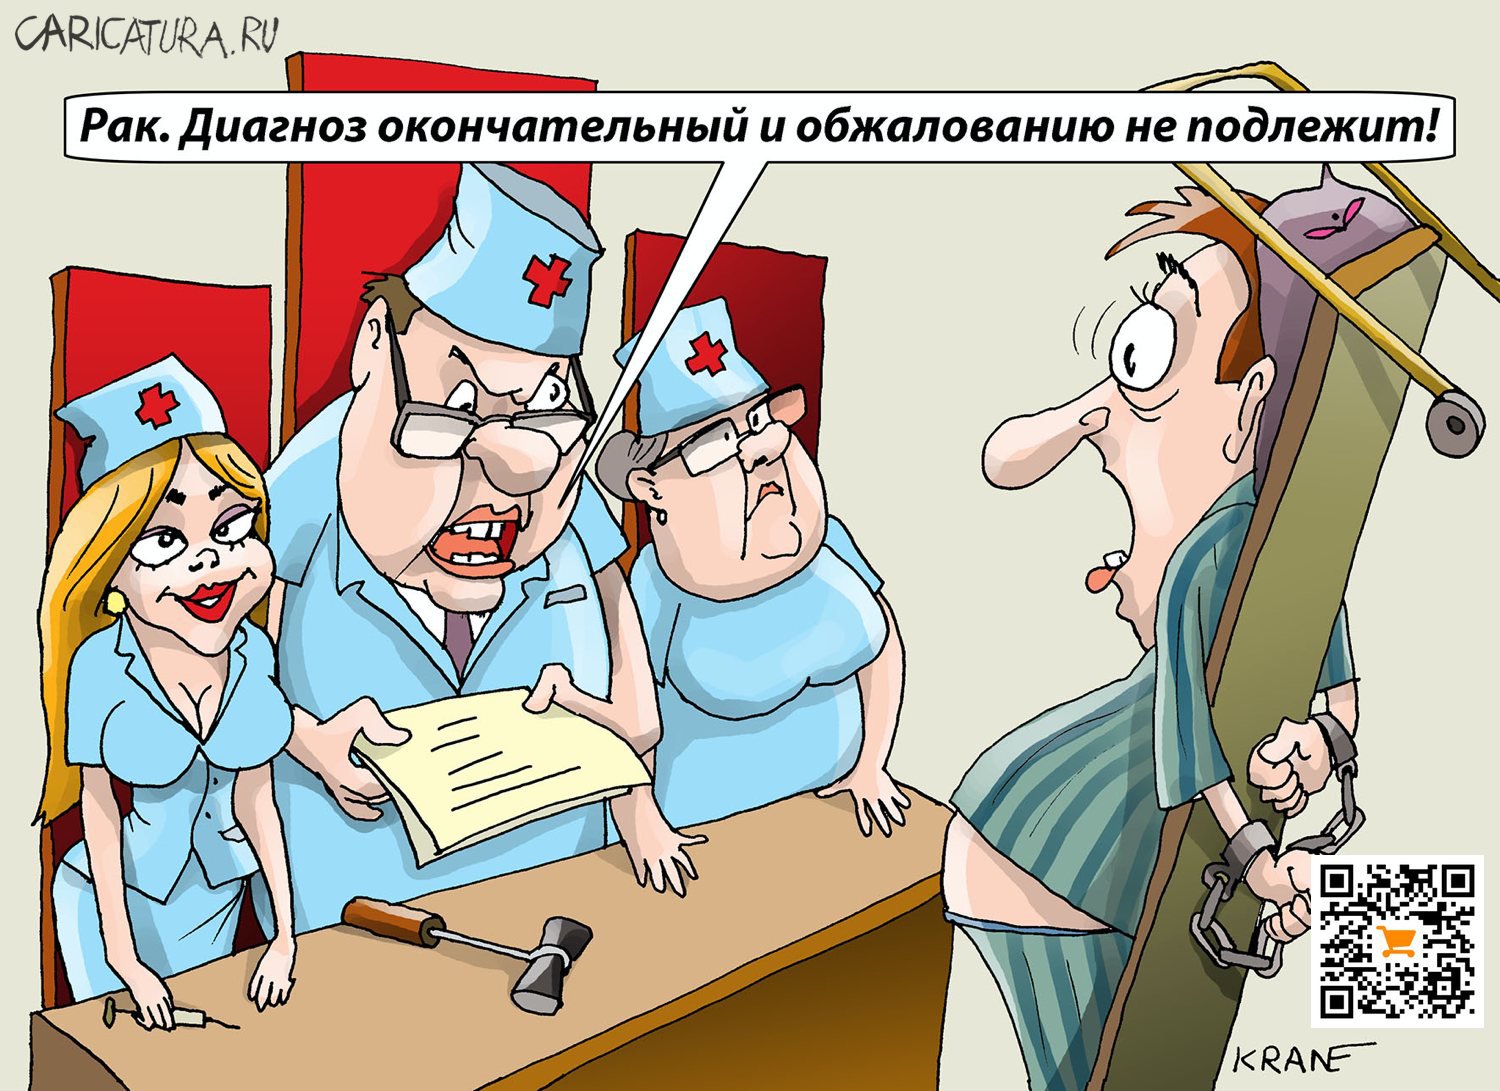 Карикатура "Врачебный суд идет", Евгений Кран